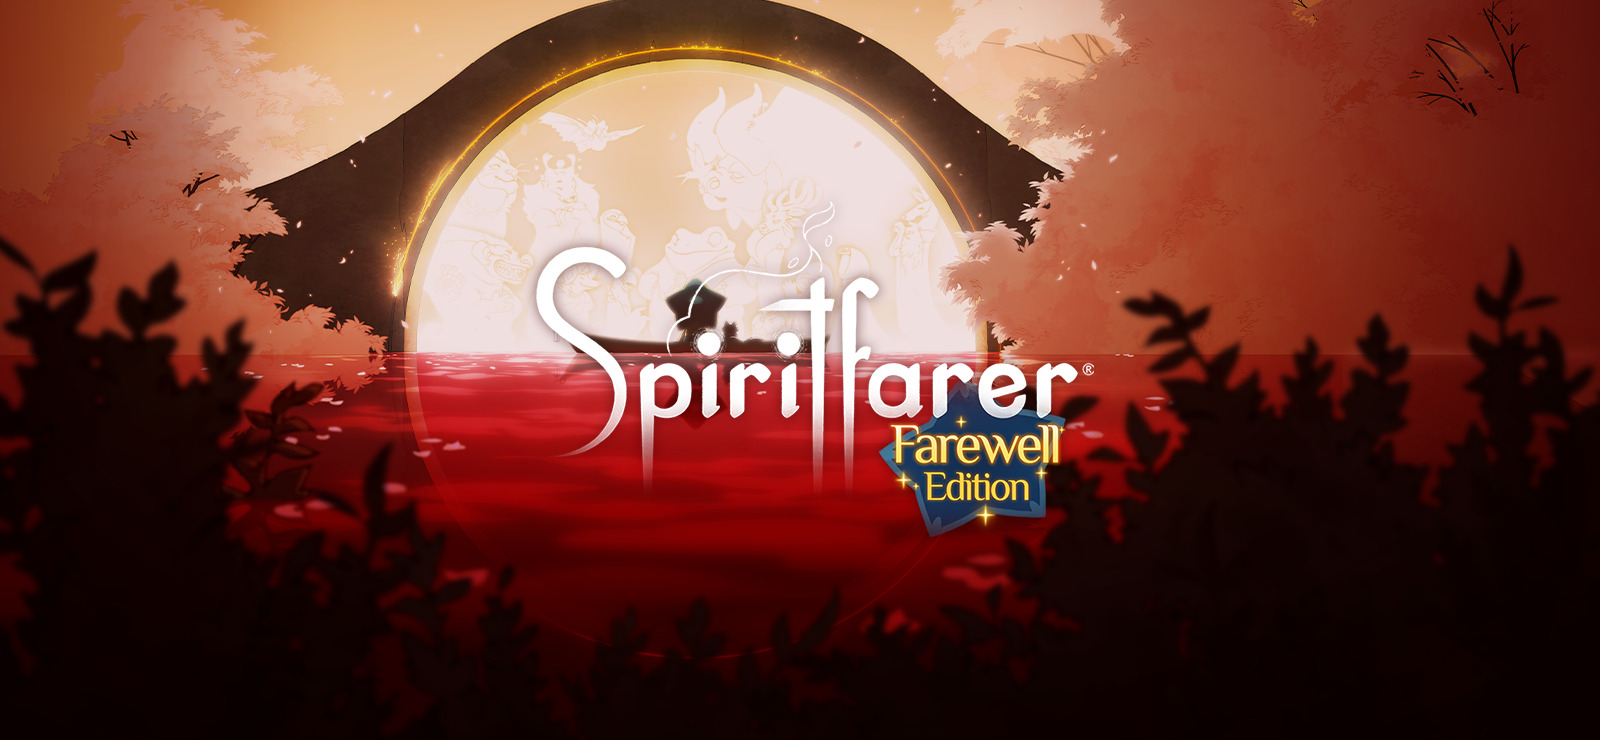 Buy the Spiritfarer Digital Art Book on Itch.io!